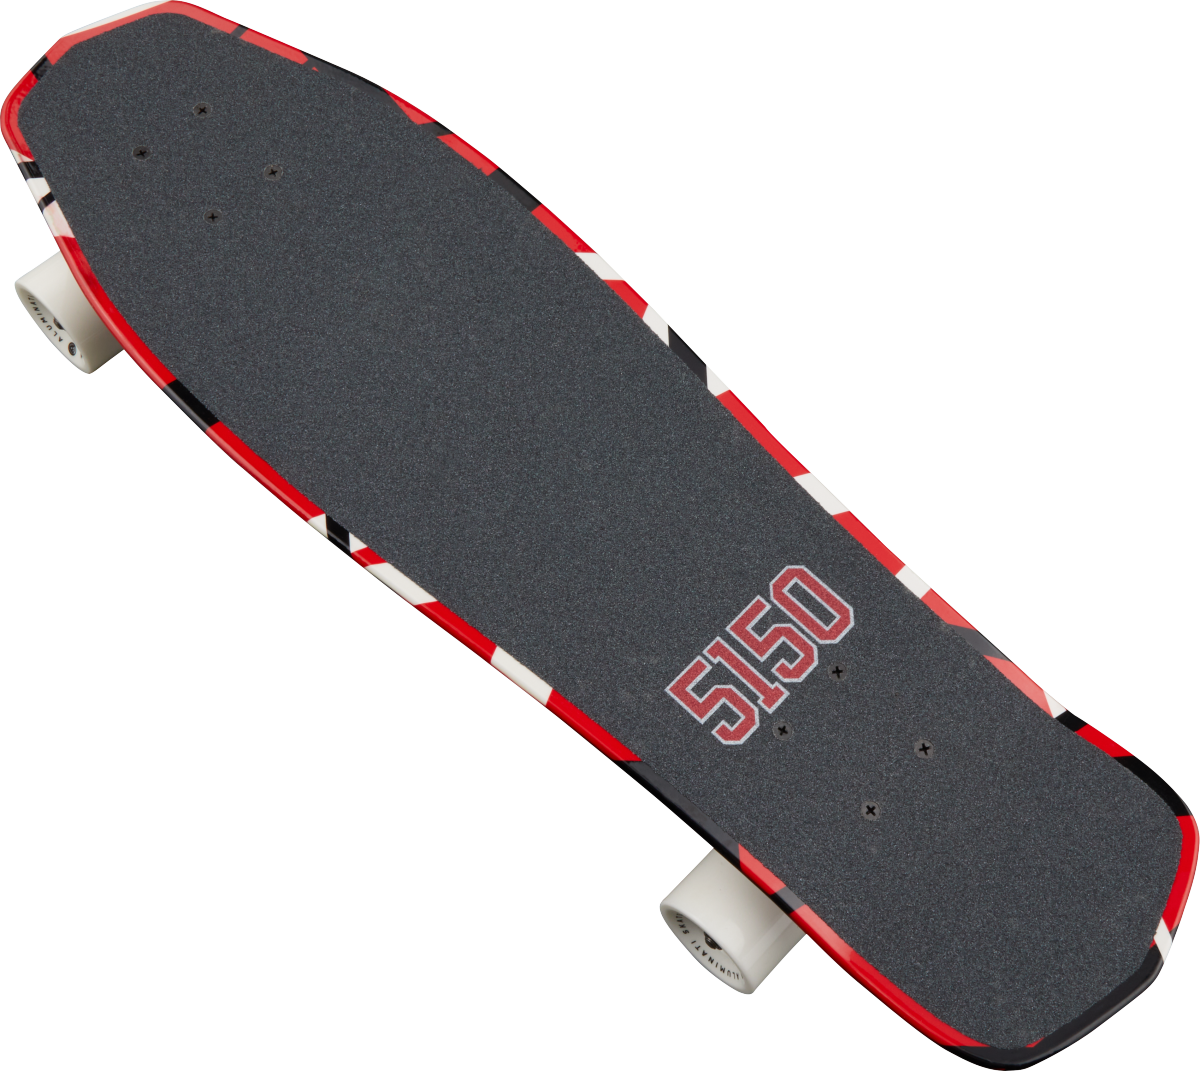 EVH 5150 Skateboard, Red, White and Black Stripes : photo 1